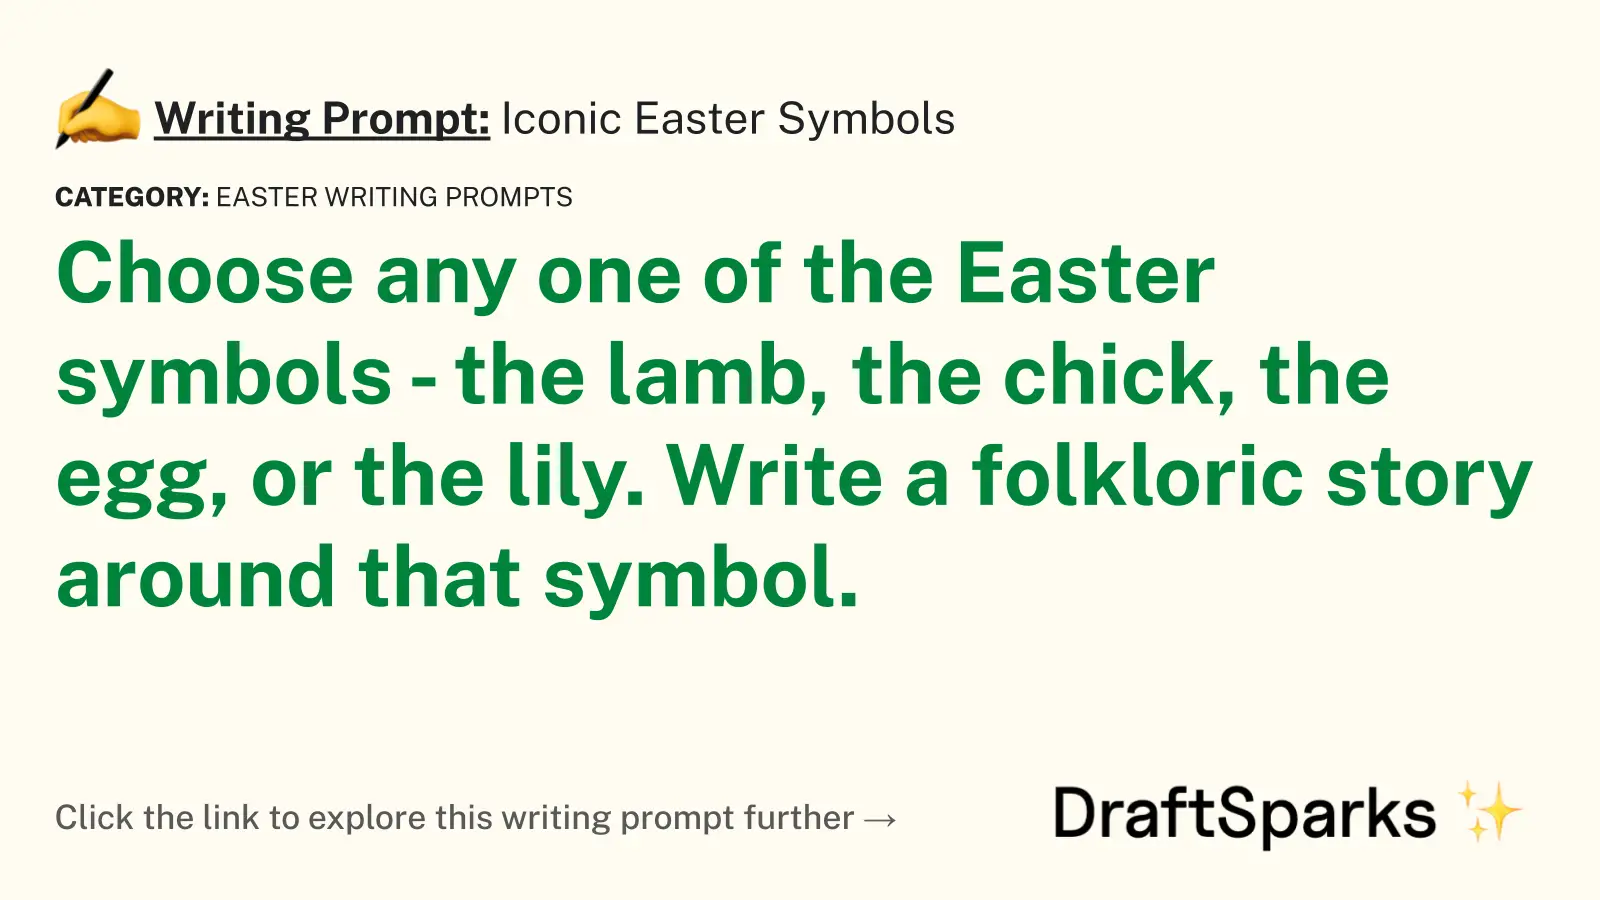 Iconic Easter Symbols